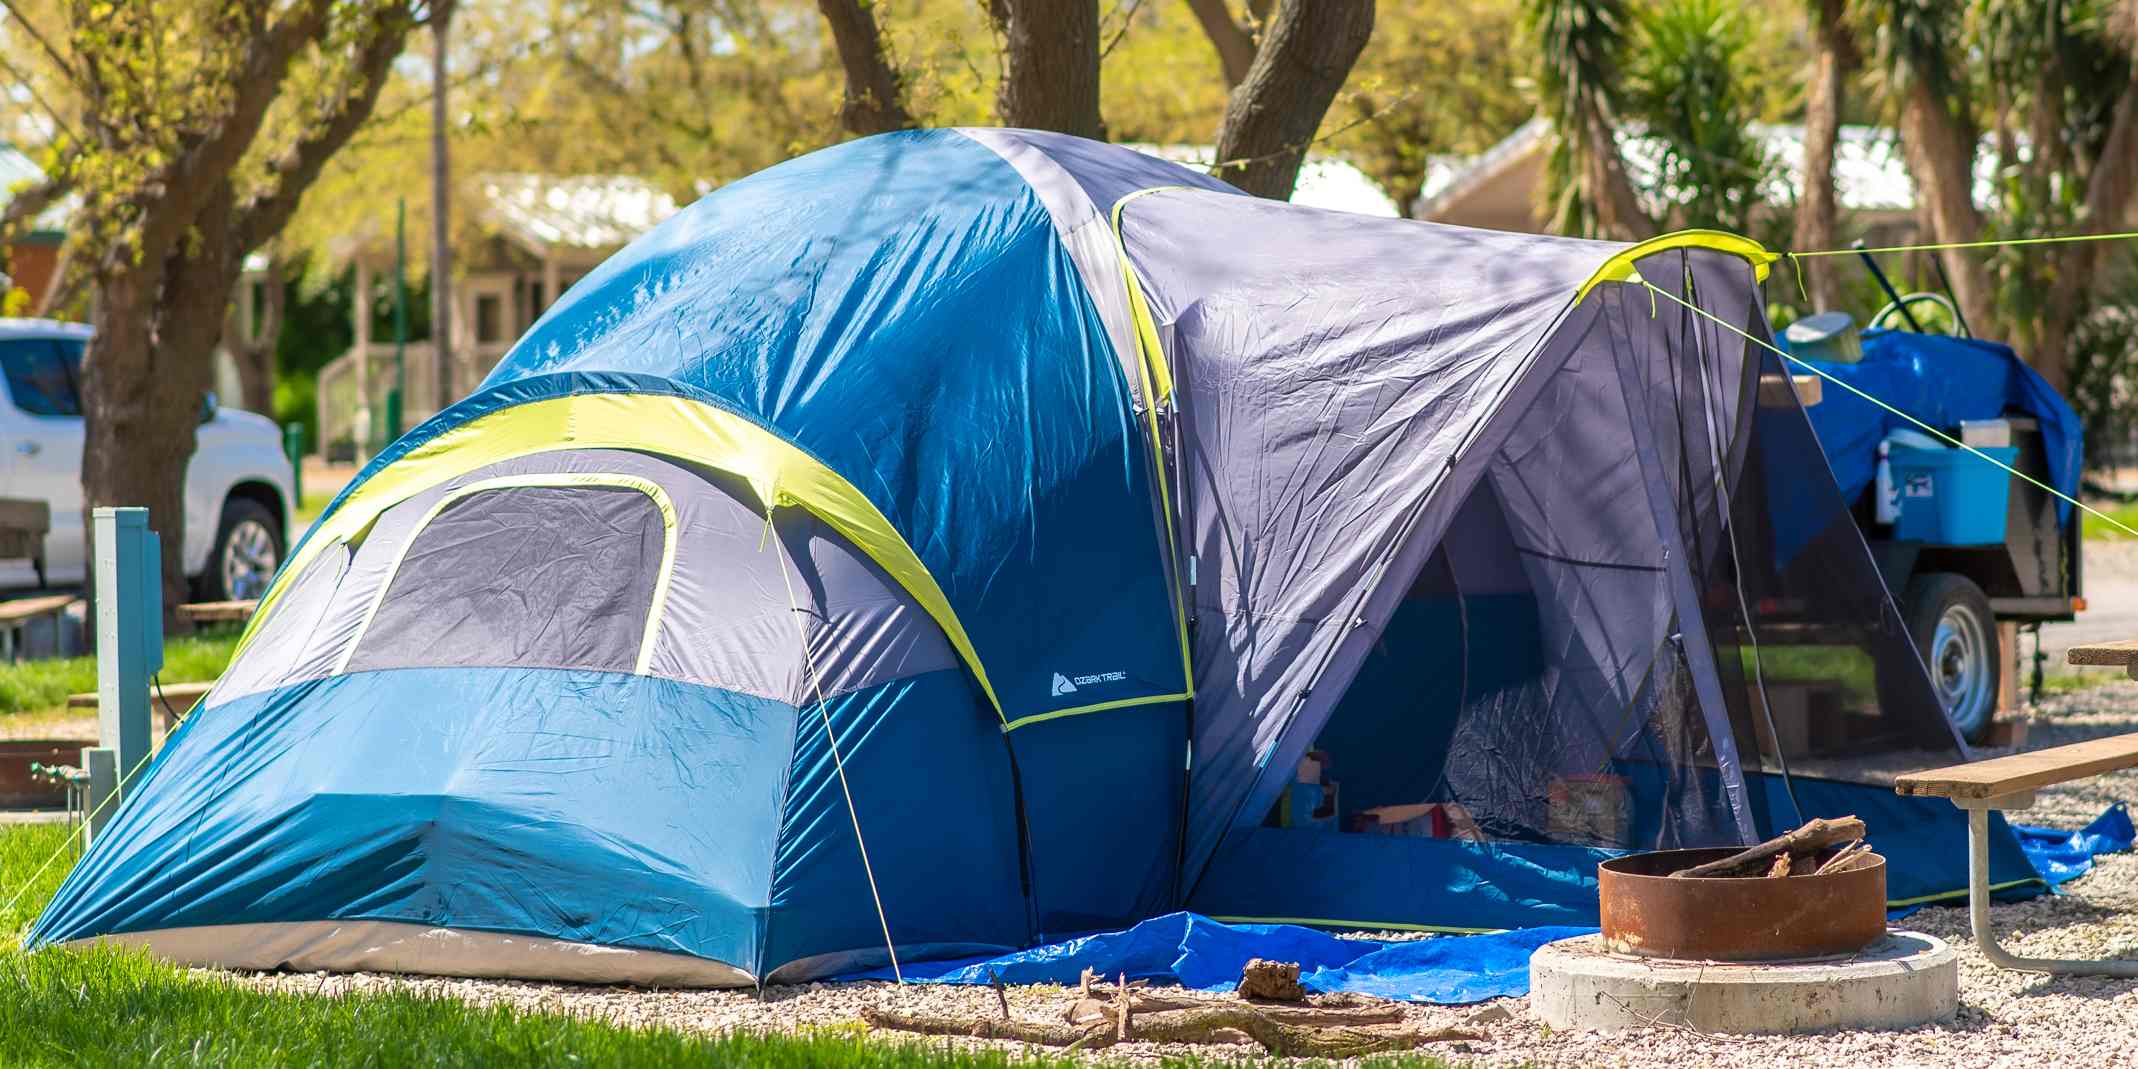 A tent setup at Camp Fimfo Waco